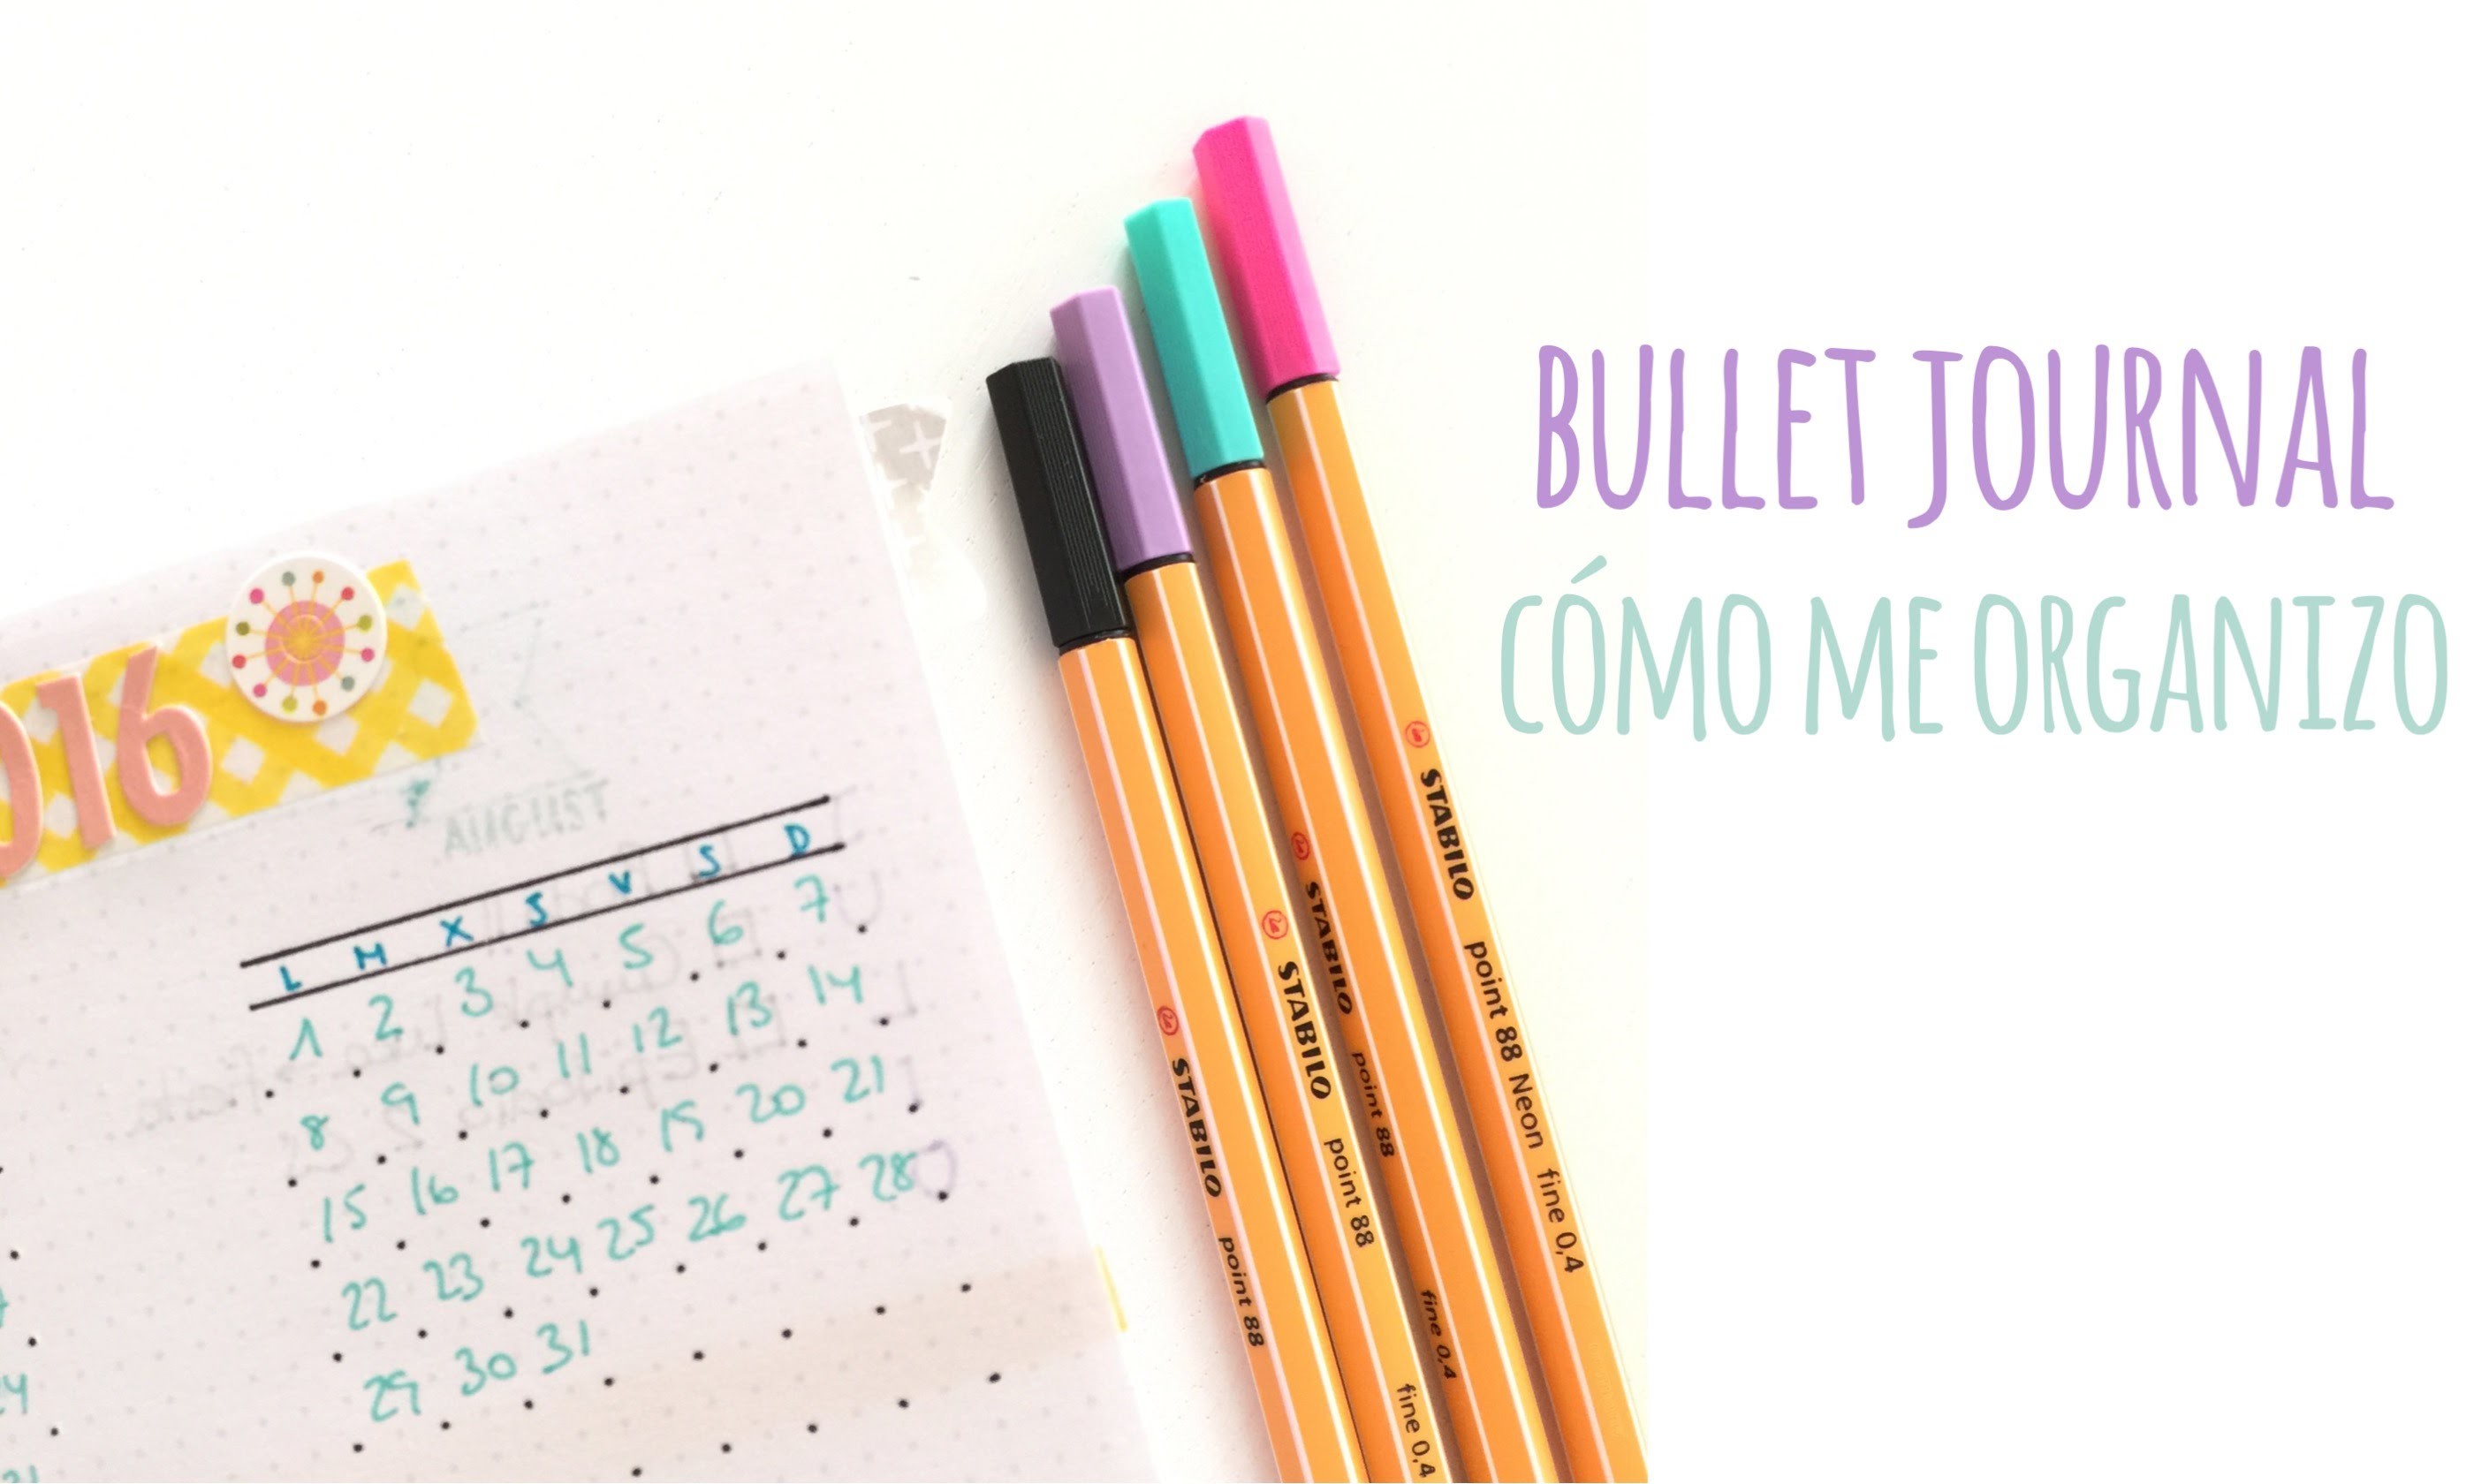 Mi Bullet Journal - Cómo me organizo